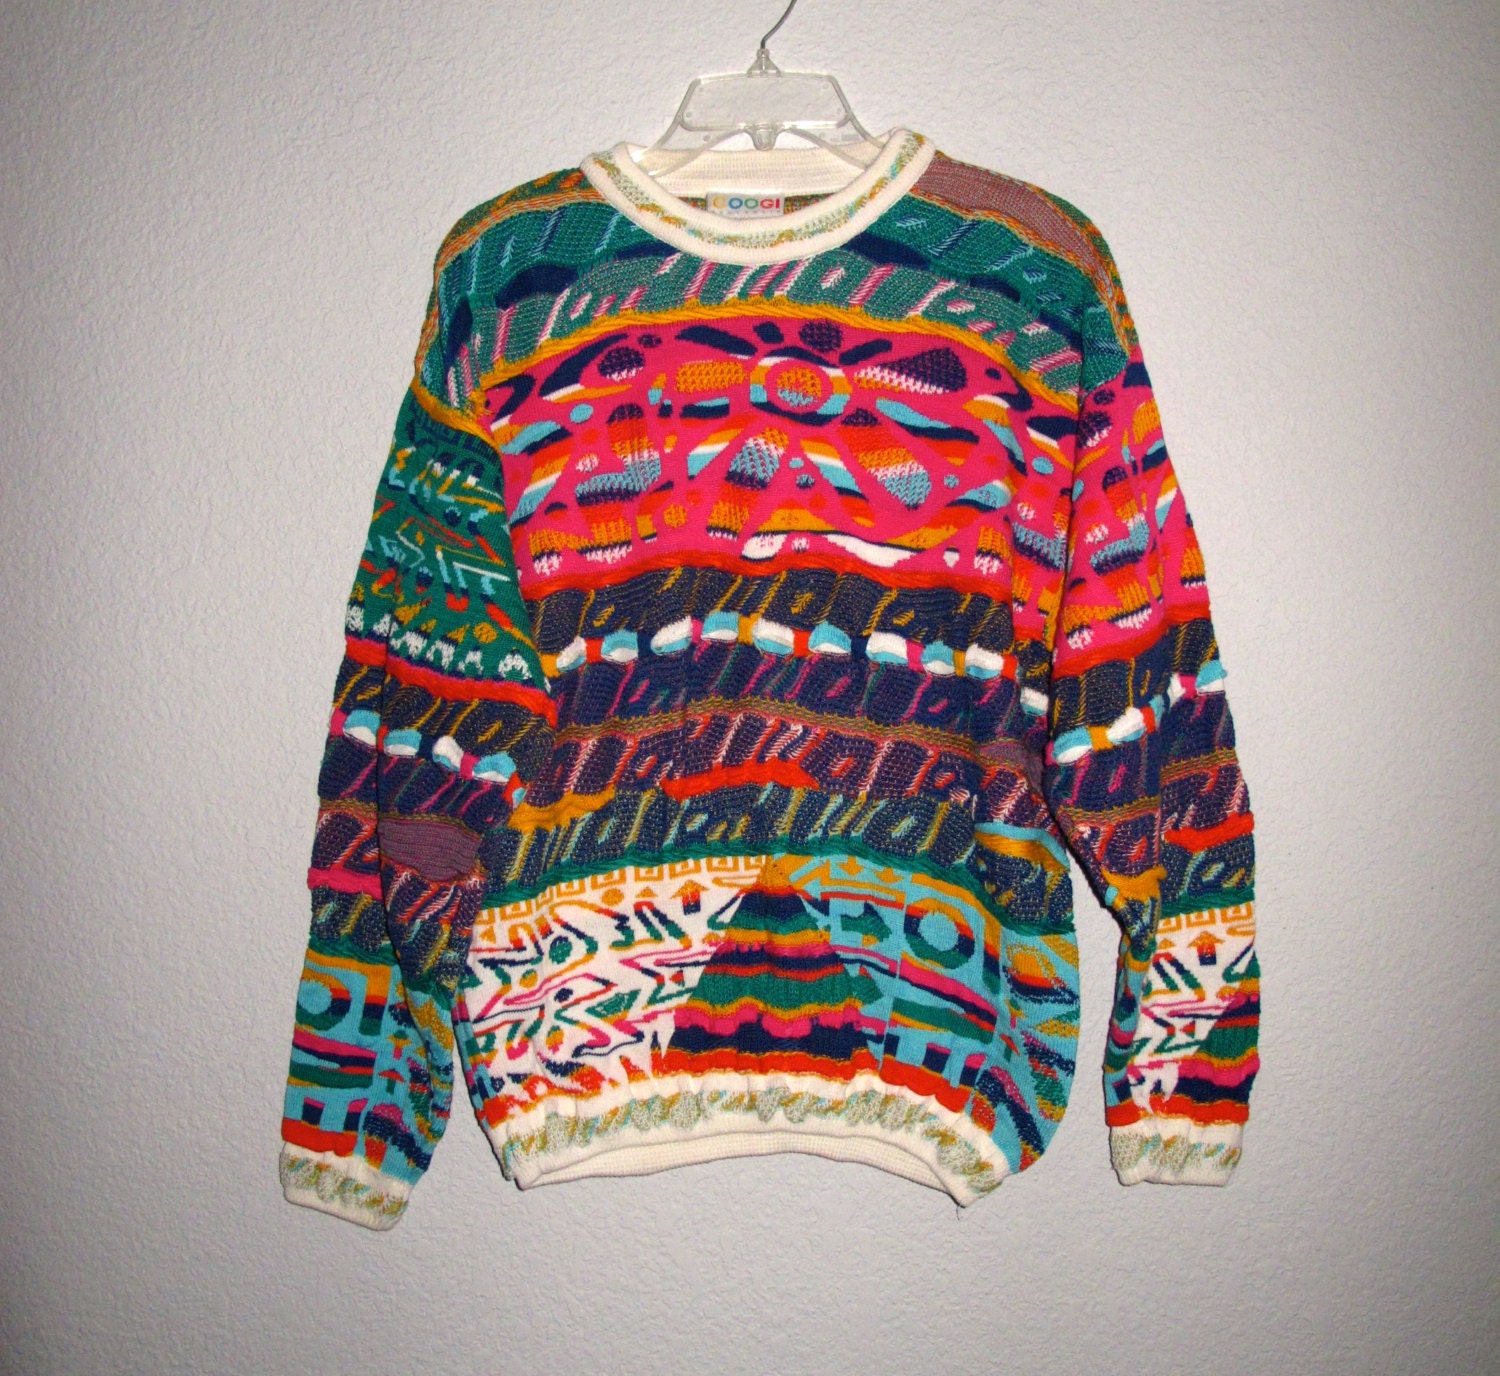 COOGI Australia Sweater size M Cotton Colorful by BlueRoseRetro